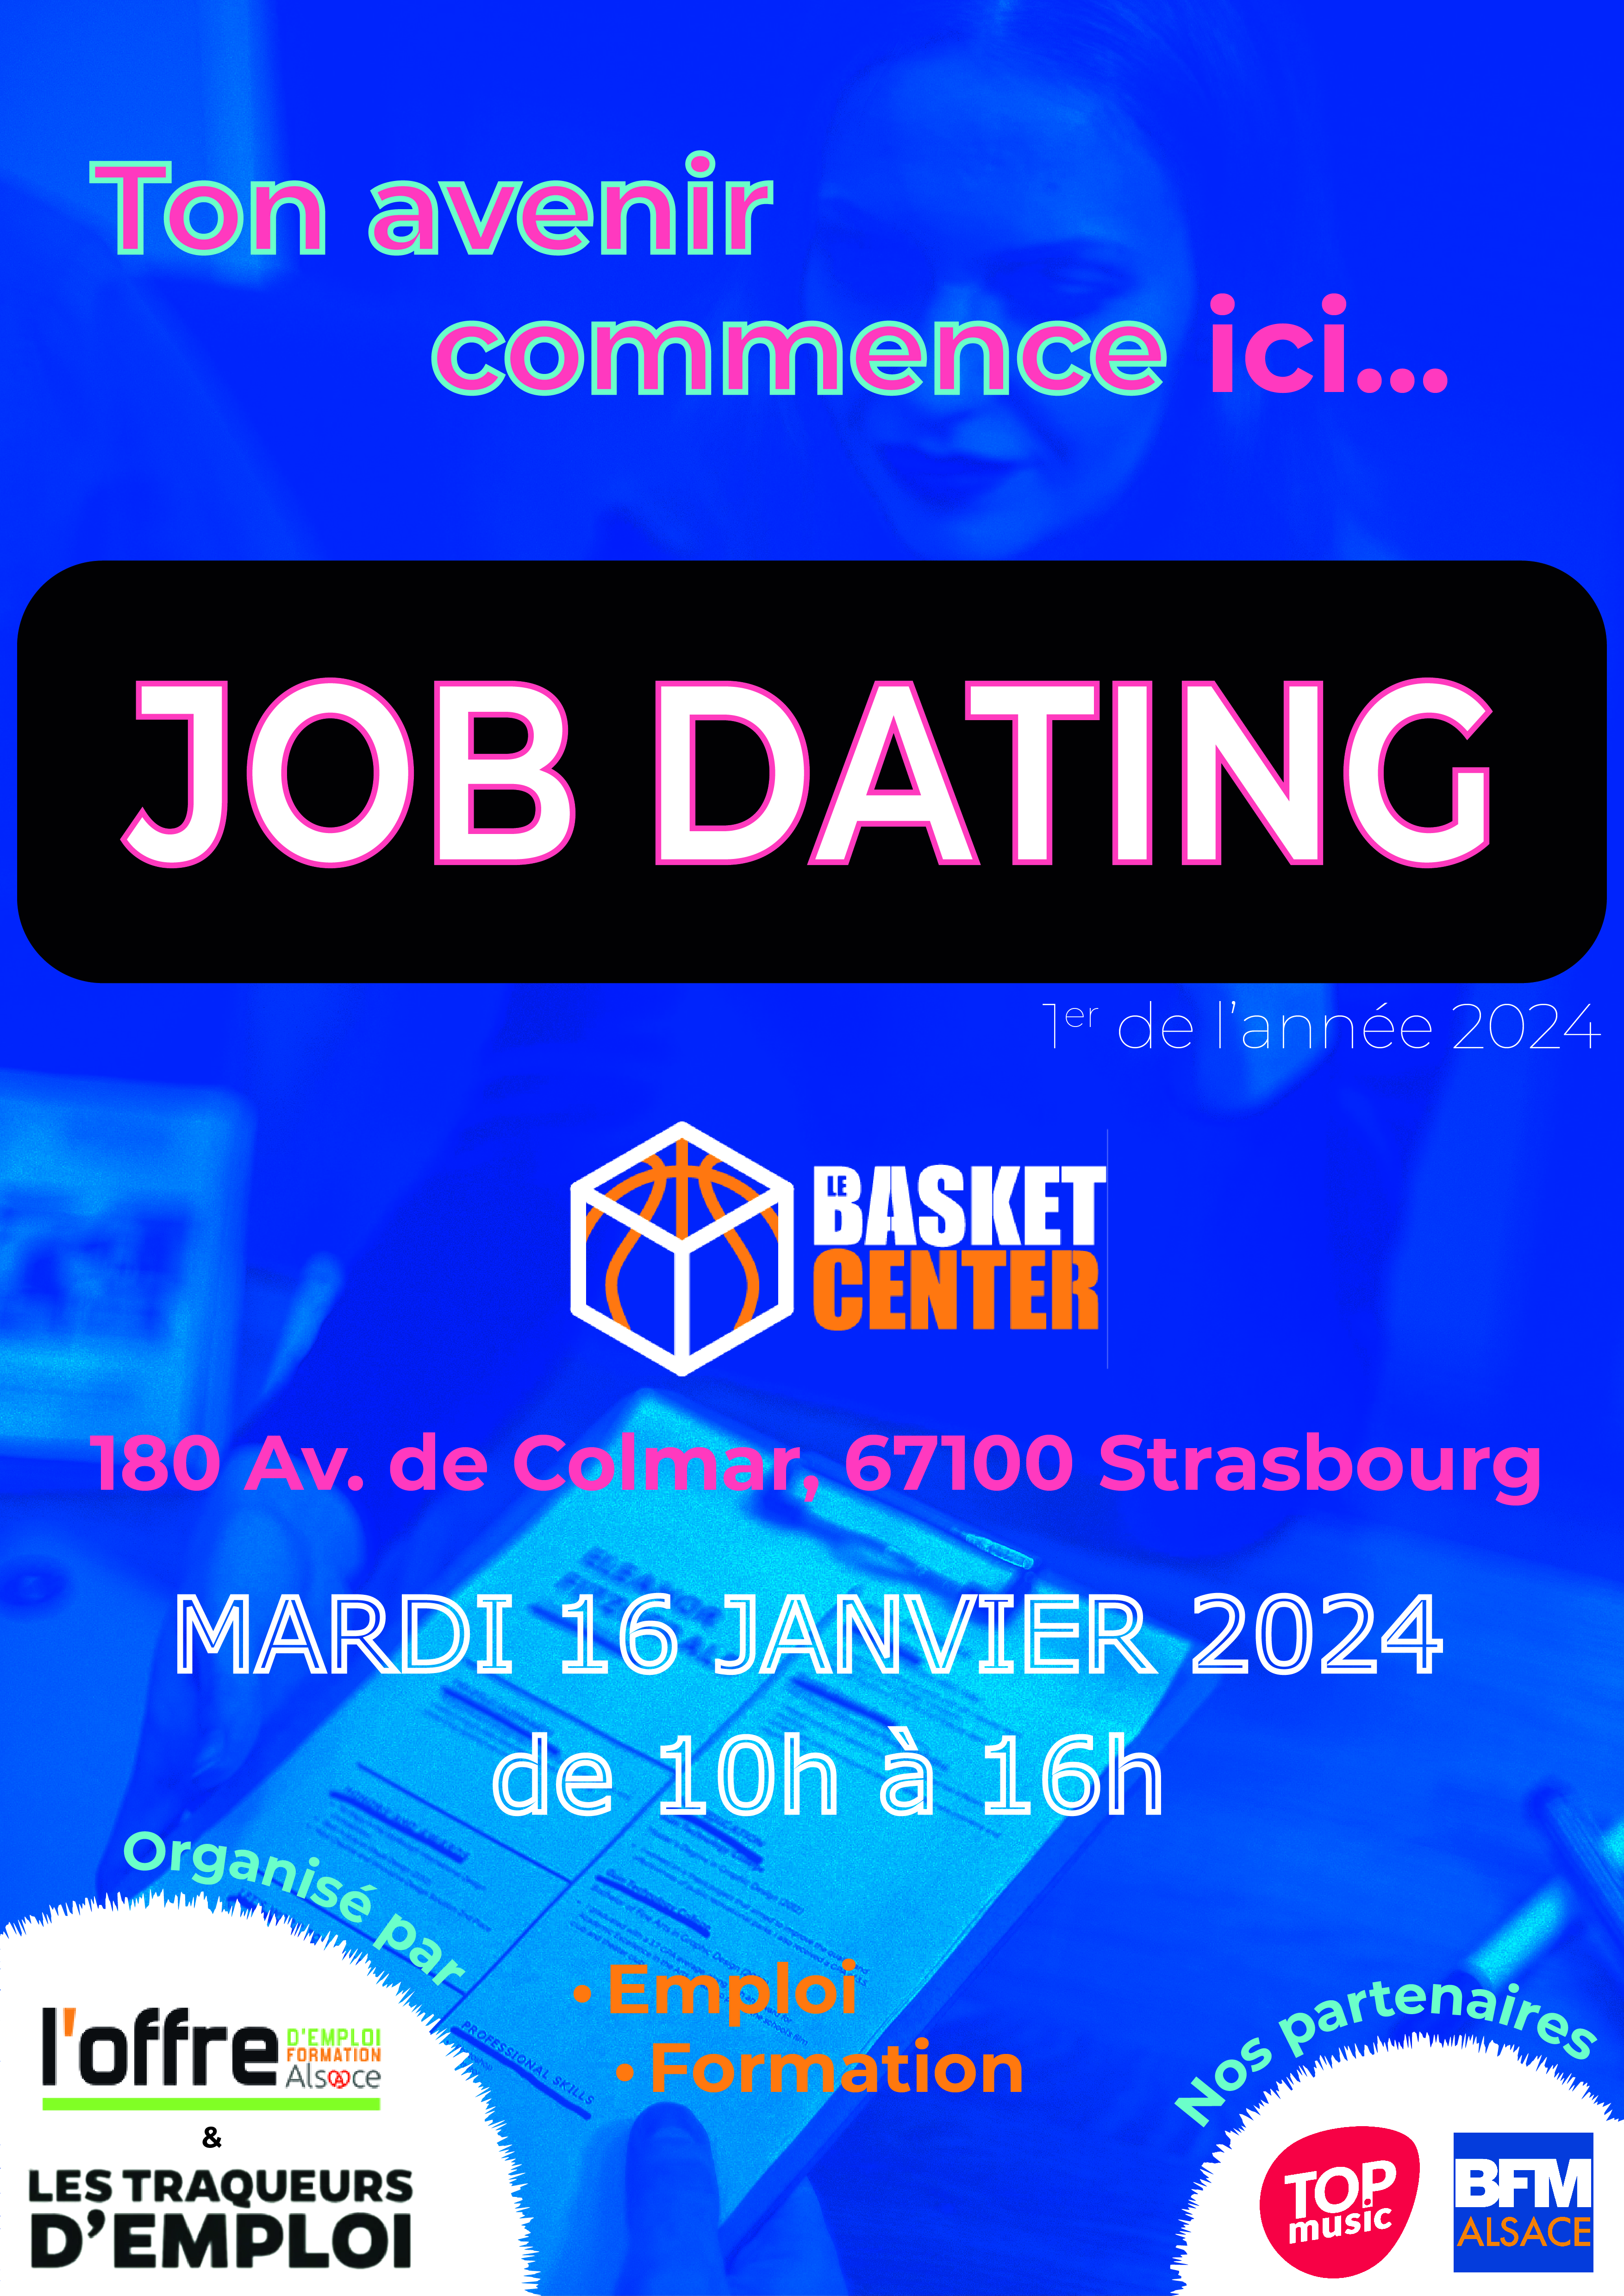 JOB DATING LE 16 JANVIER 2024 recrute JOB DATING- 16 JANVIER 2024 - BASKET CENTER STRASBOURG